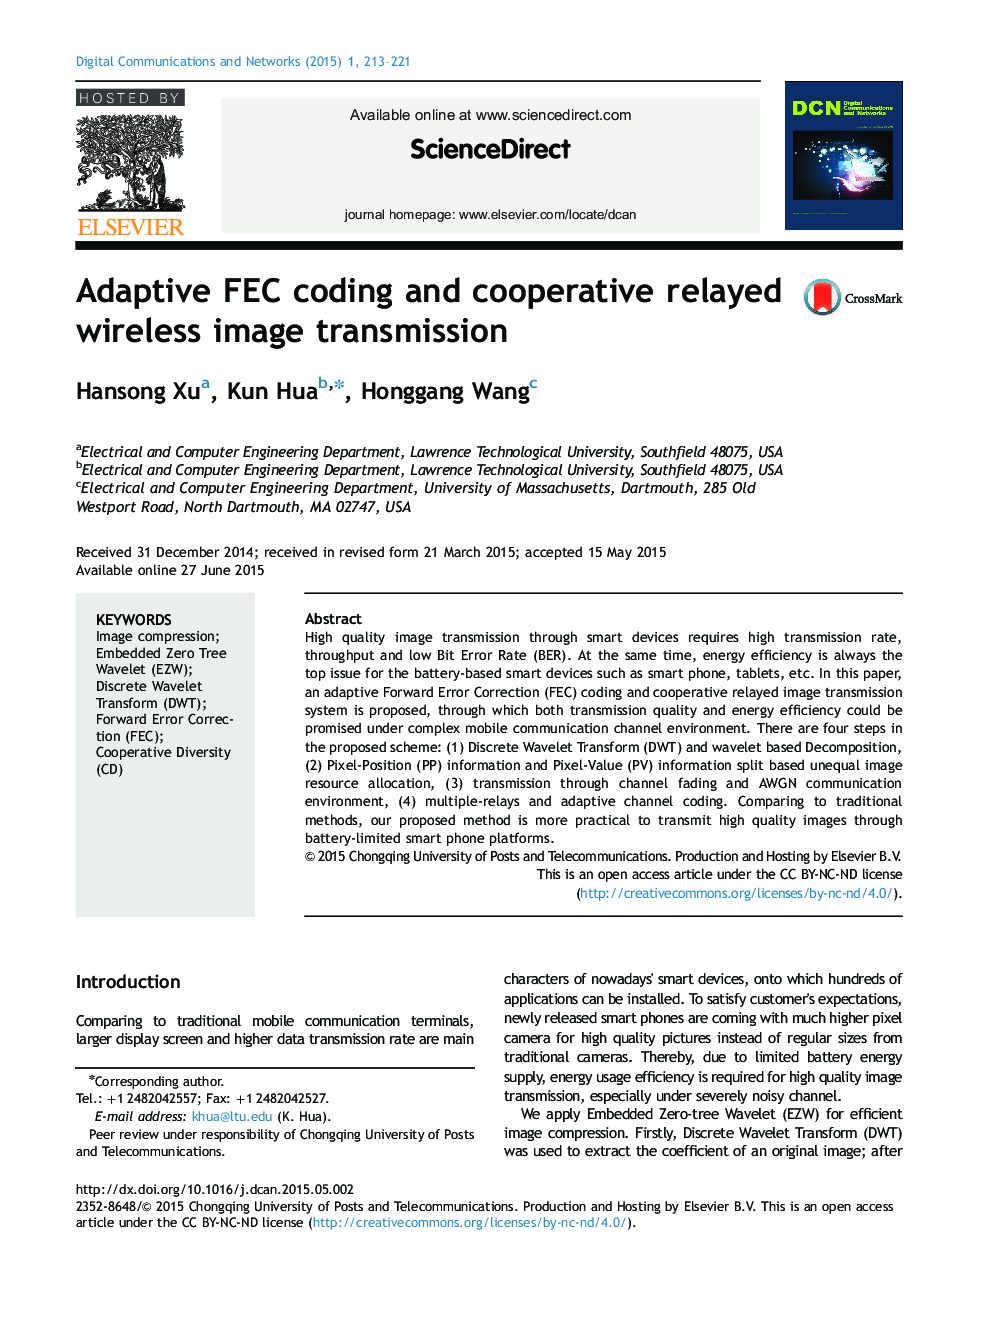 Adaptive FEC coding and cooperative relayed wireless image transmission 